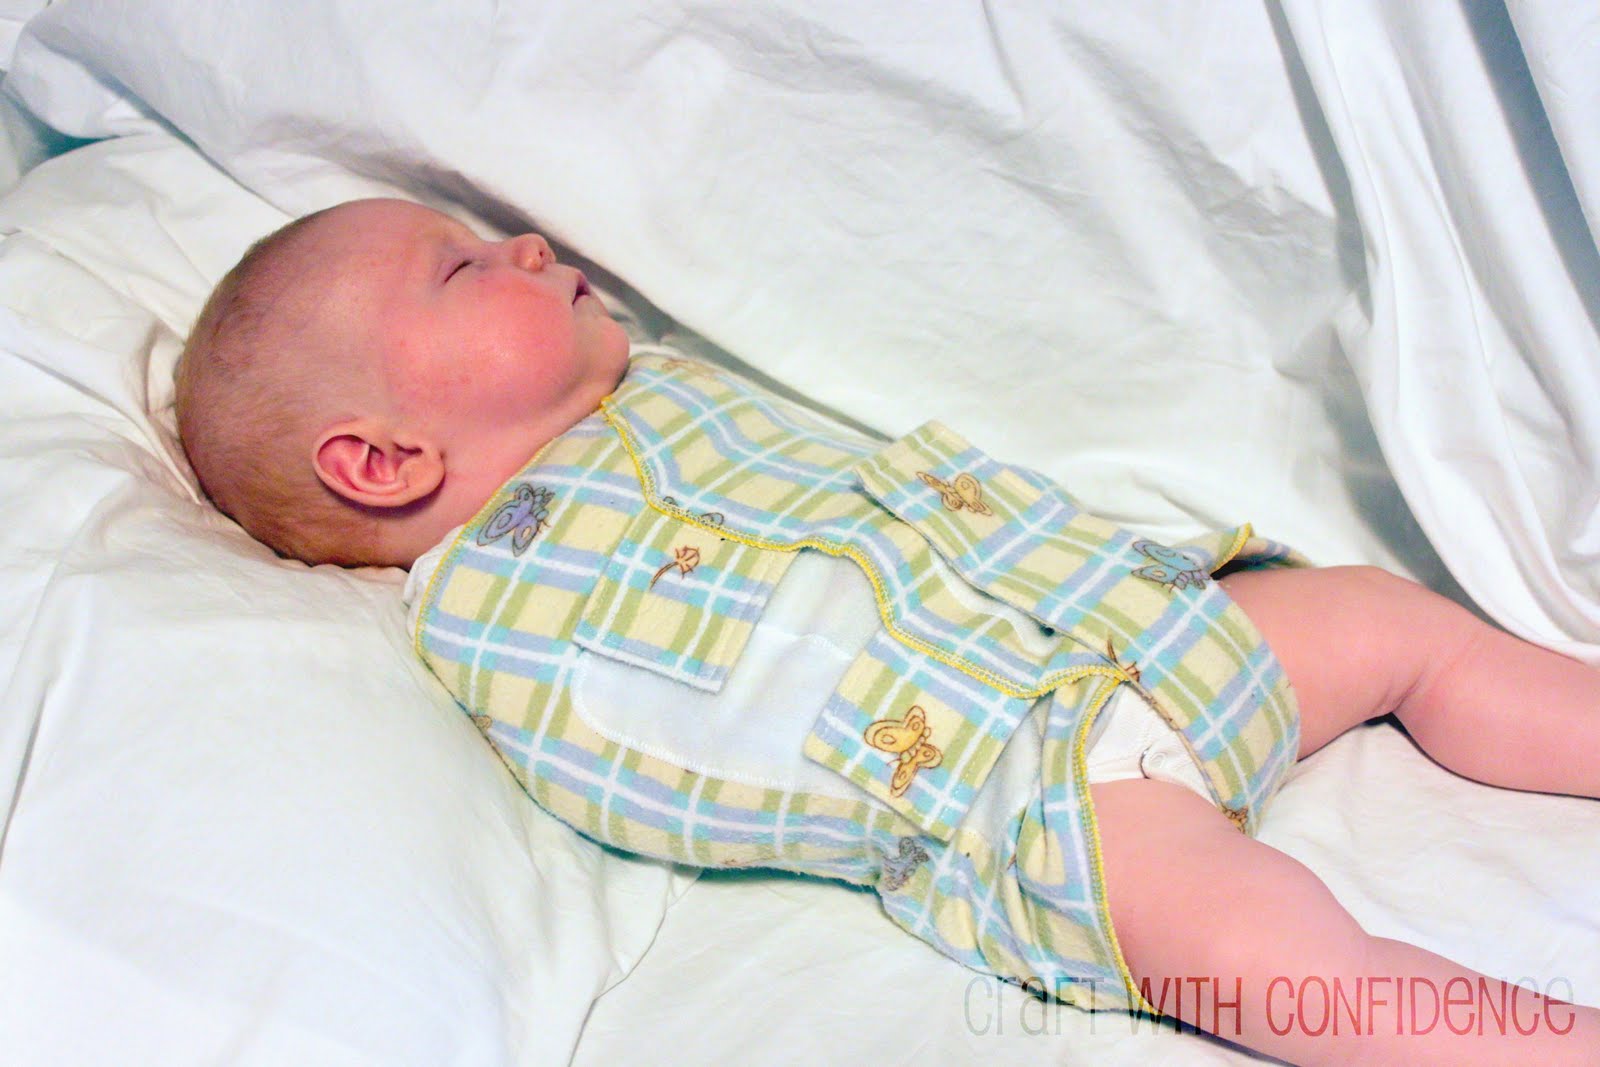 Сон пеленание. Пеленание рук ребенка. Смирительная рубашка для младенца. Рубашка для пеленания ребенка смирительная. Запеленать руки ребенку.